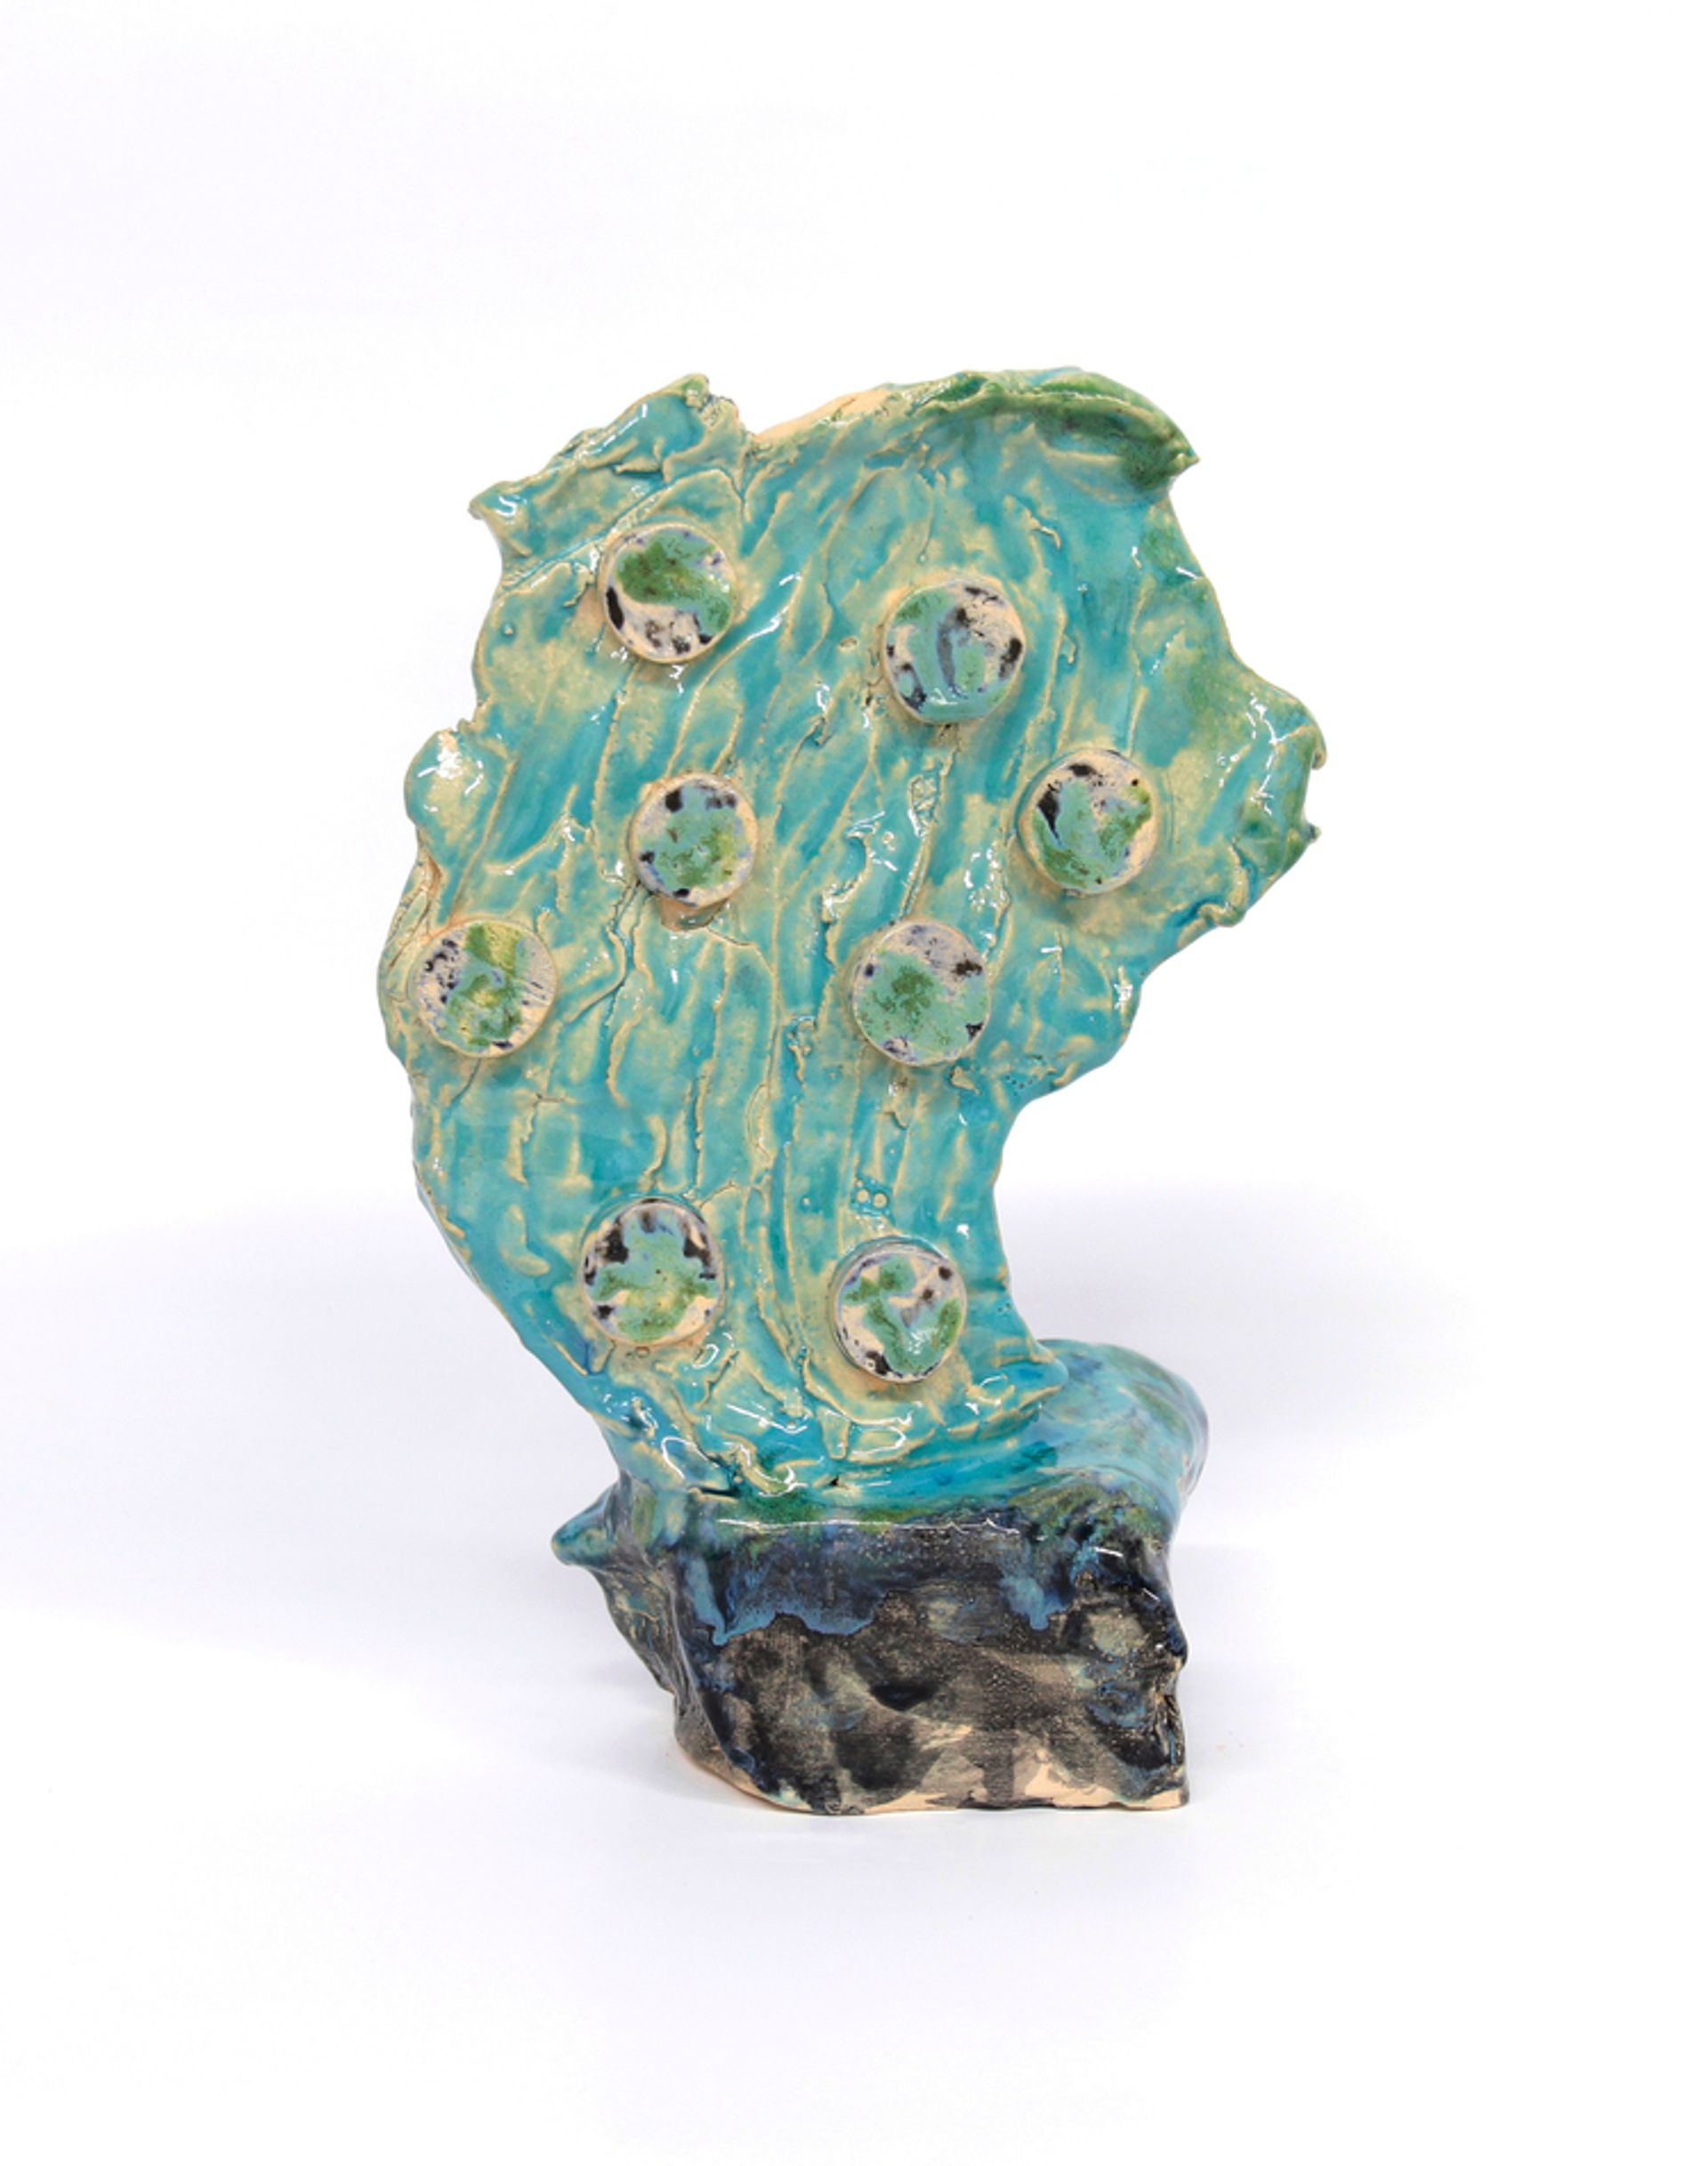 Veronika Hilger, Untitled, 2015, glazed ceramic, 26 × 17 × 8,5 cm